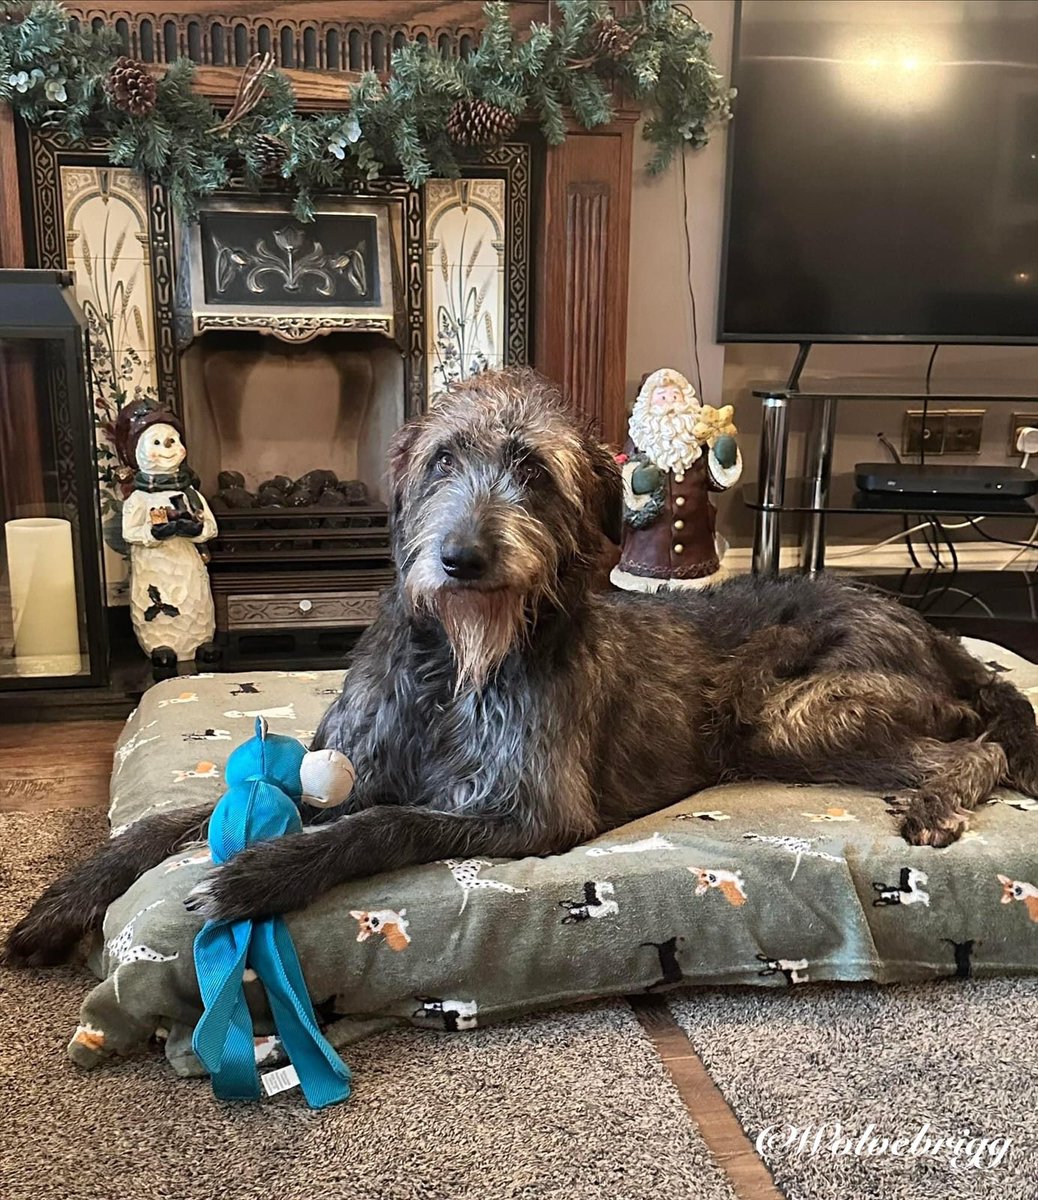 Nuala loves her Christmas present!🐺❤️
#IrishWolfhound #DogsofTwitter #dogs #Christmaspresent